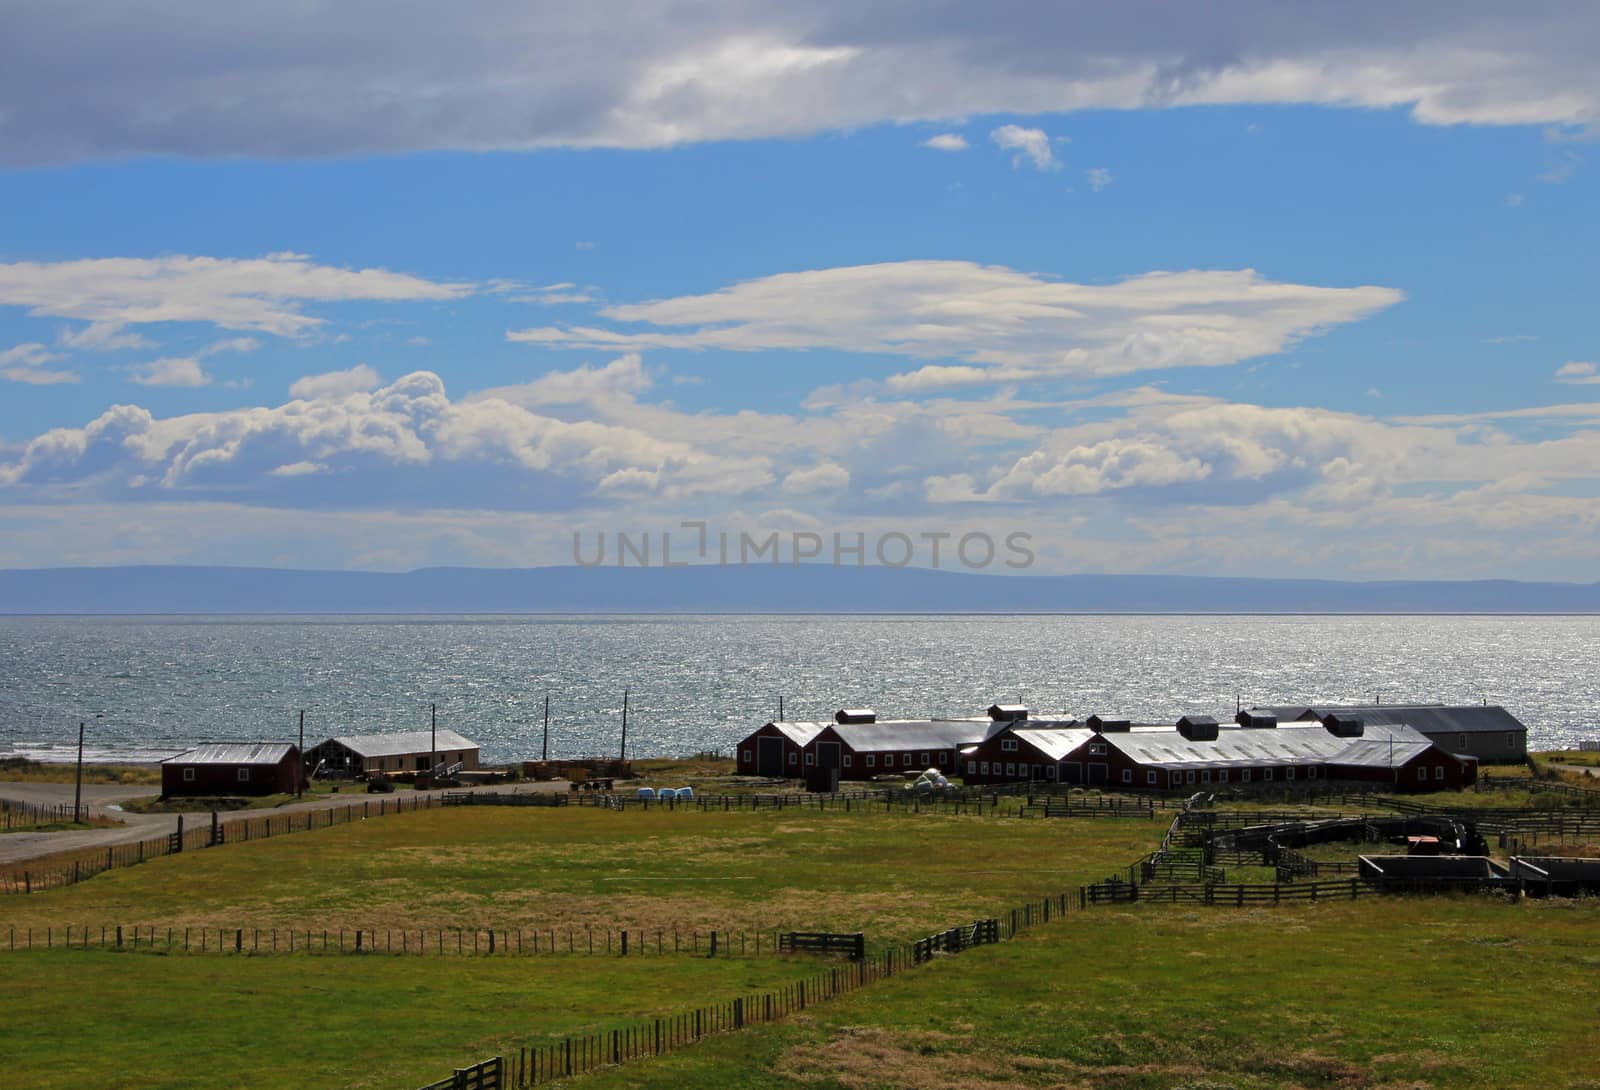 Farm near Cameron village centre of the municipality of Temaukel, Tierra Del Fuego, Chile by cicloco